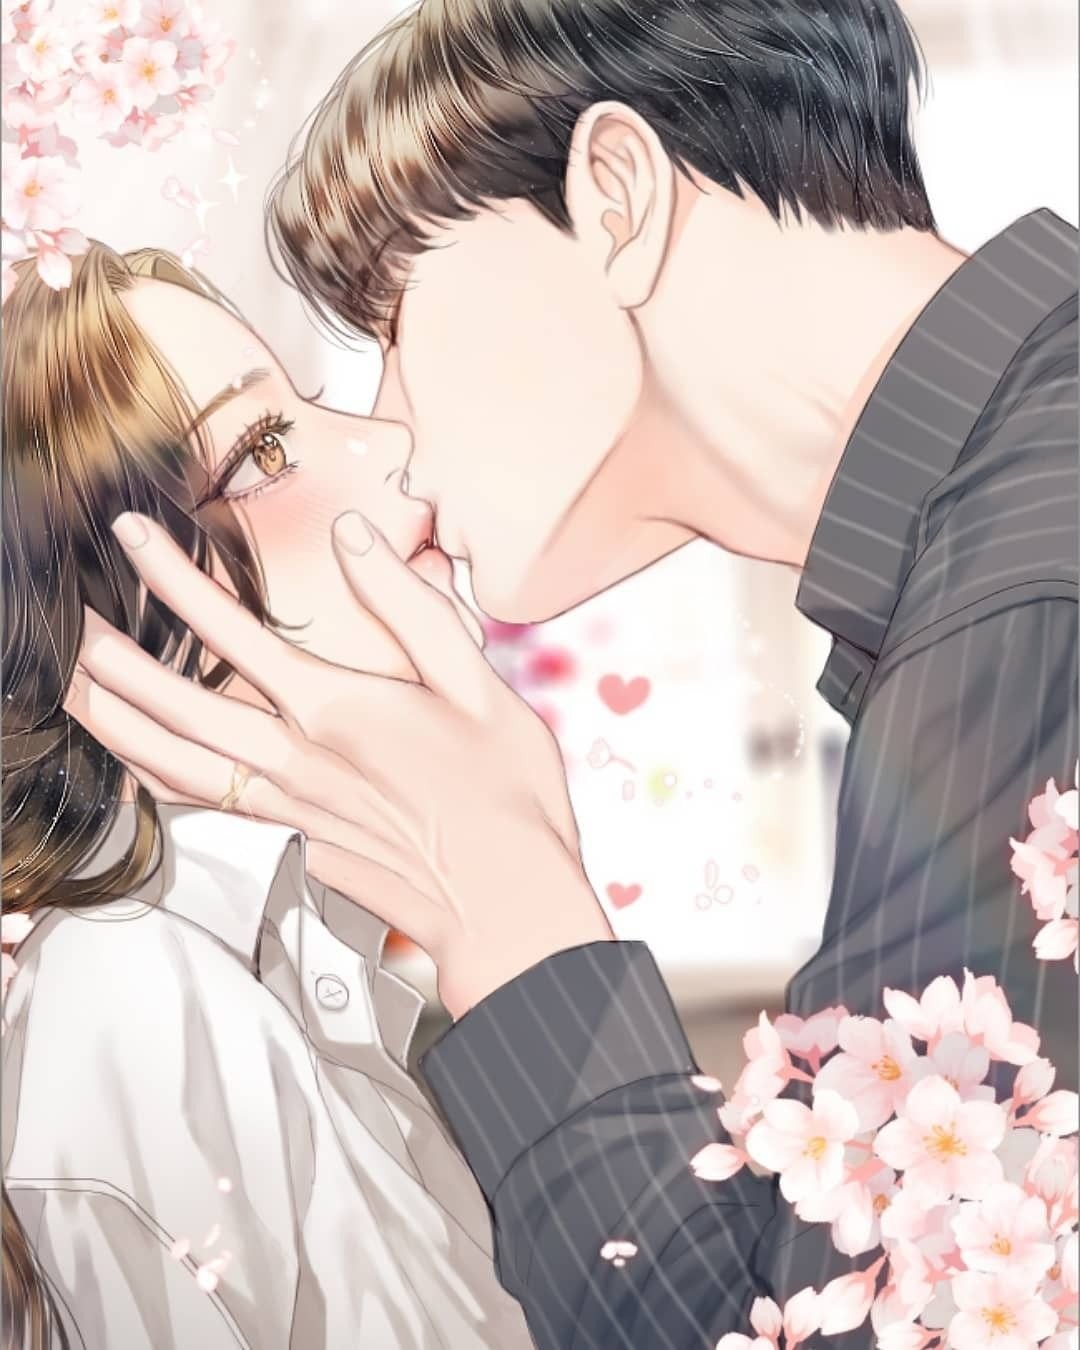 Манхва первый поцелуй был запланирован. Маньхуа Немилая поцелуй. Корейская манхва парочки. Романтика манхва и манхуа.